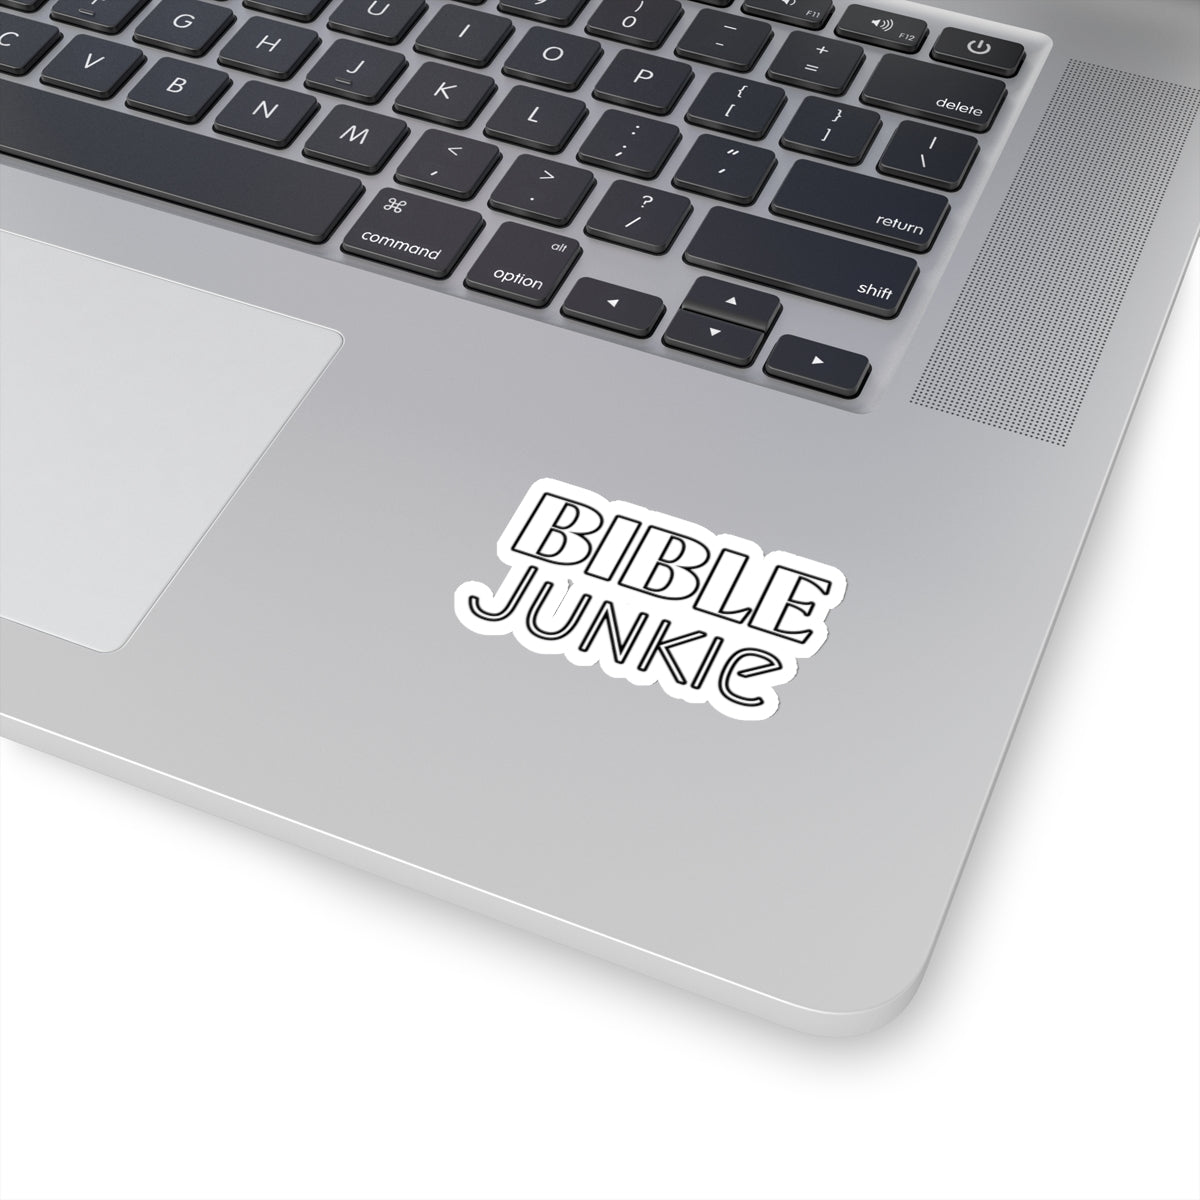 The Bible Junkies®, Decal/Sticker